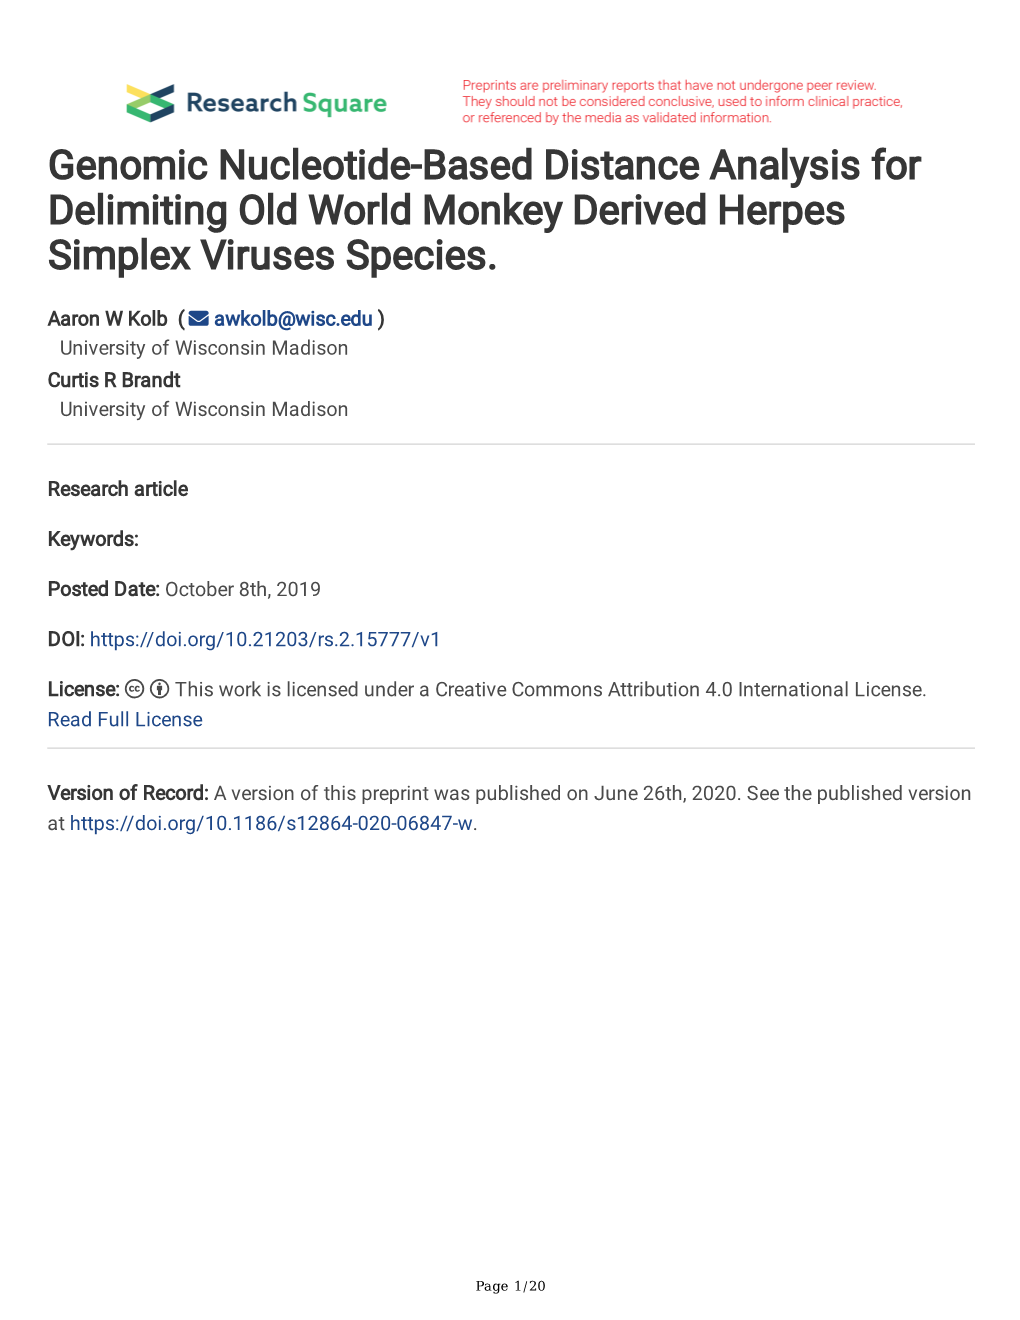 Genomic Nucleotide-Based Distance Analysis for Delimiting Old World Monkey Derived Herpes Simplex Viruses Species